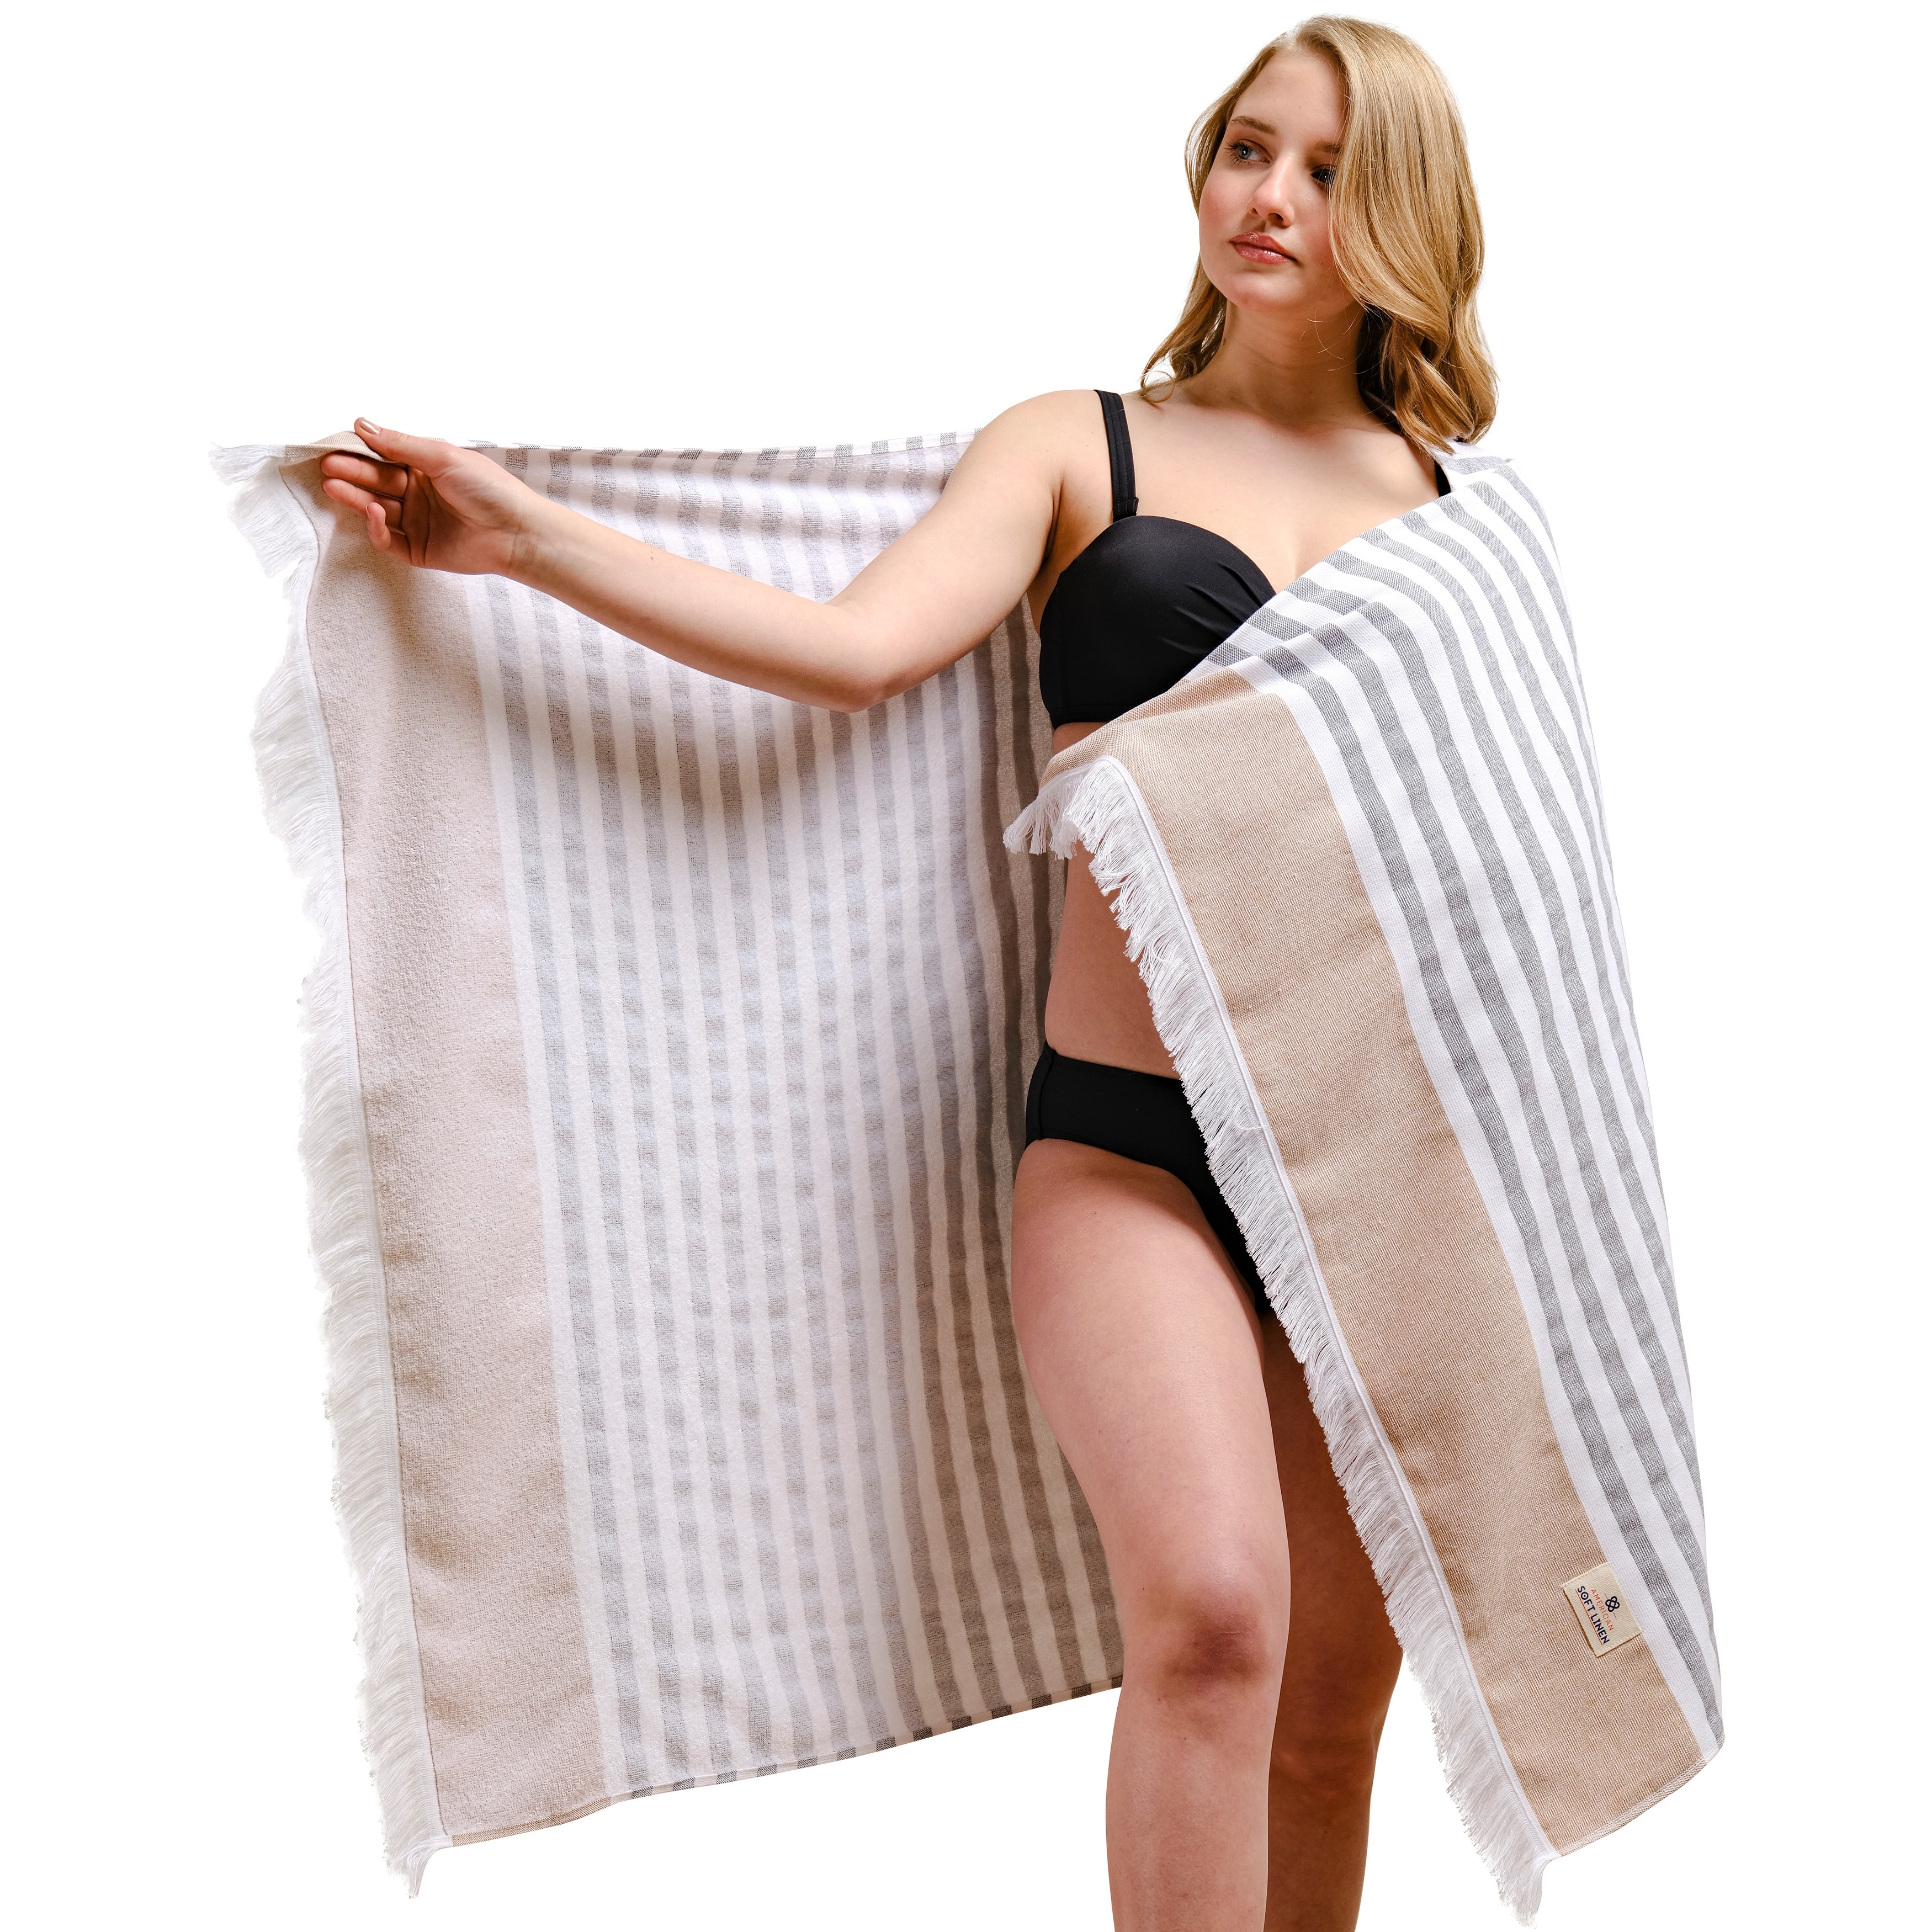 American Soft Linen Oversized Fingertip Towels, 35x70 inch